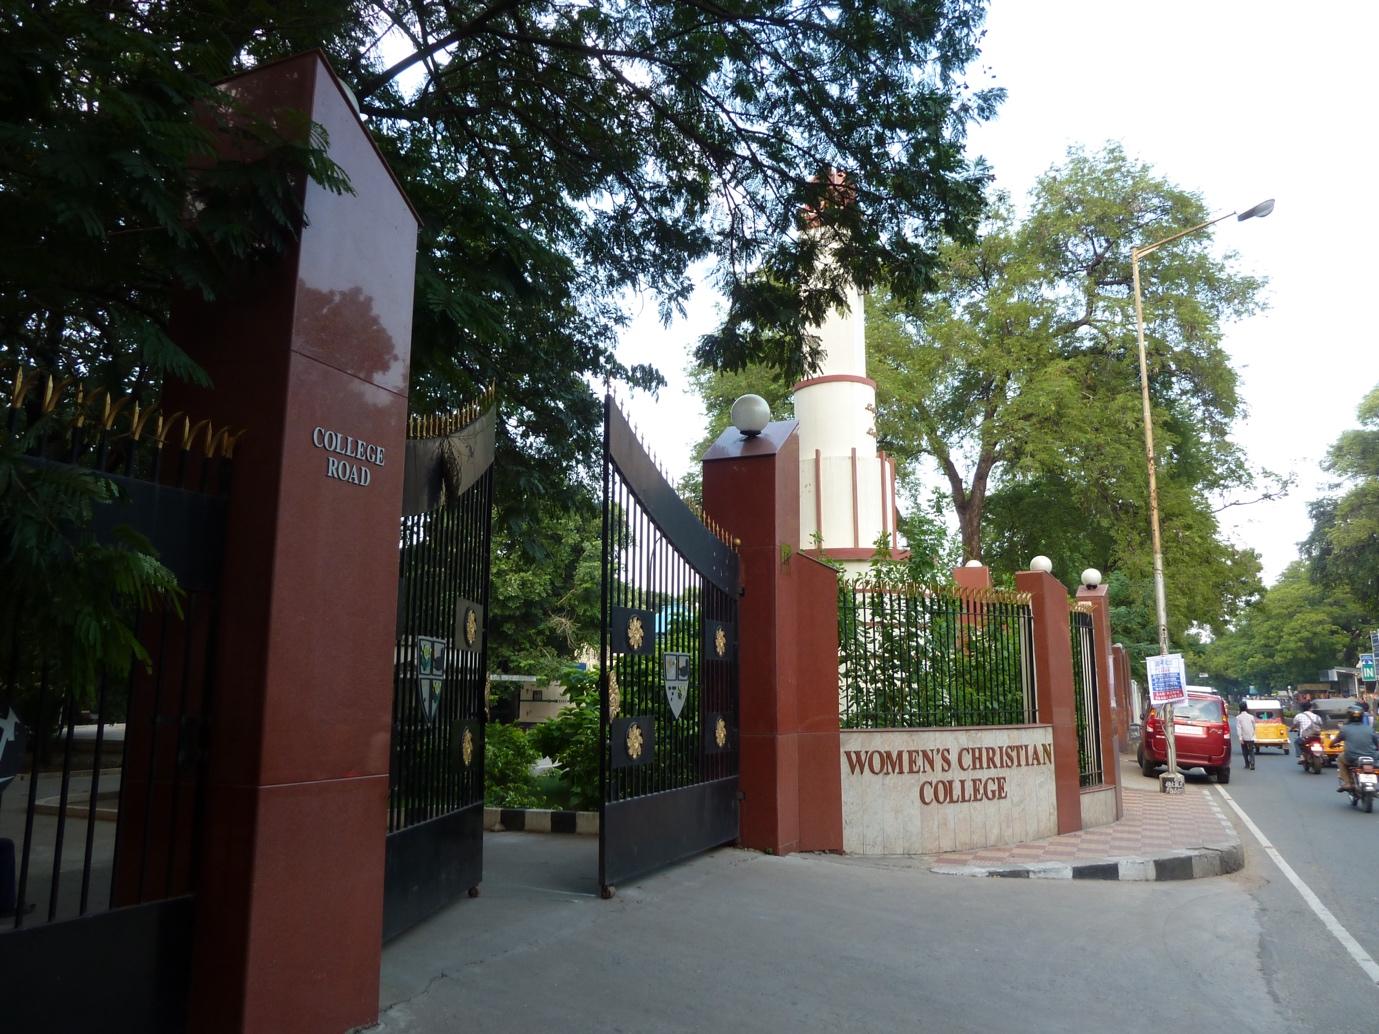 Women's Christian College is also a most prestigious college in Chennai, Tamil Nadu